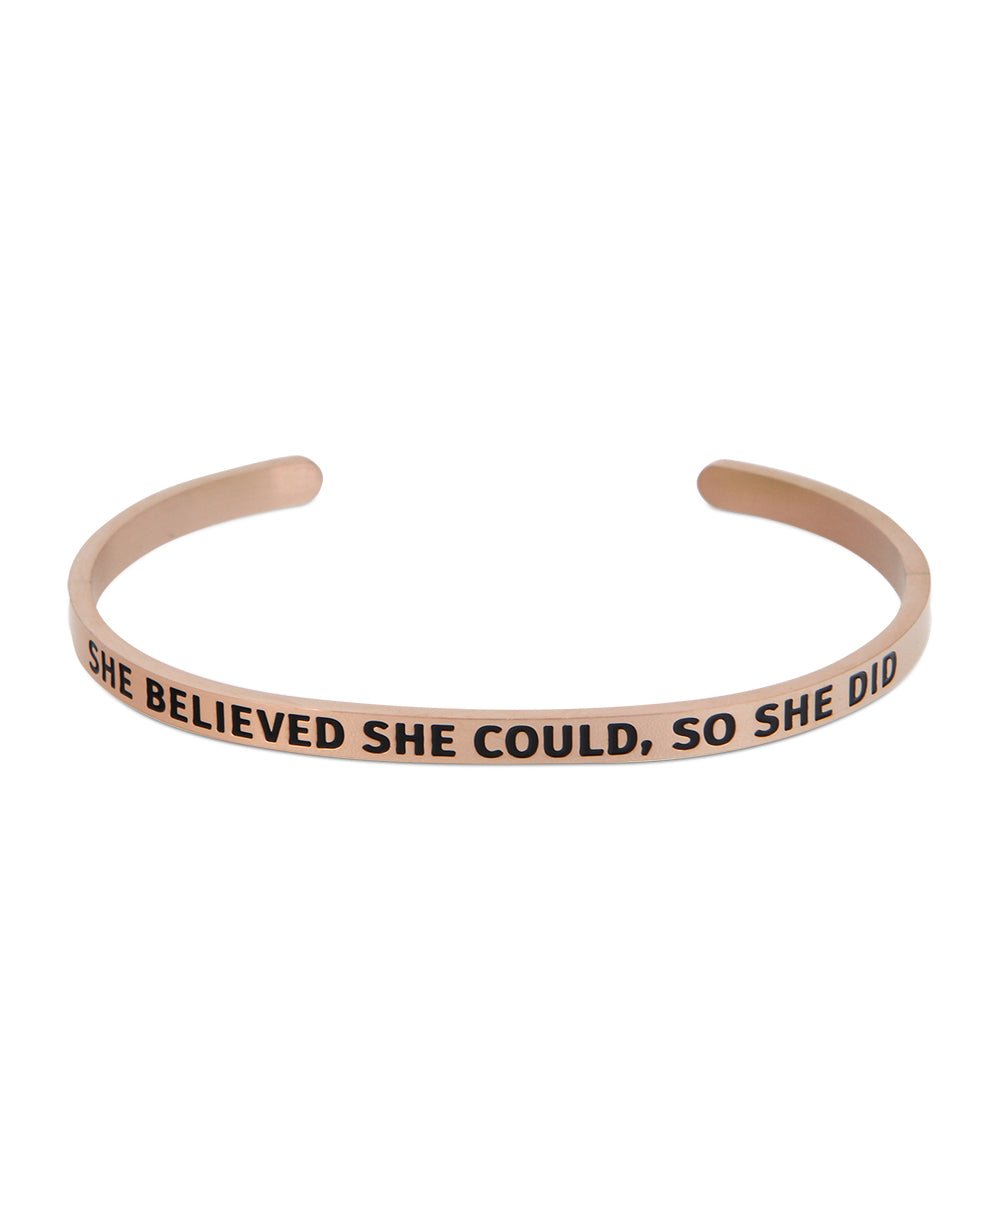 She Believed She Could So She Did, Inspirational Cuff Bracelet - Bracelets Rose Gold